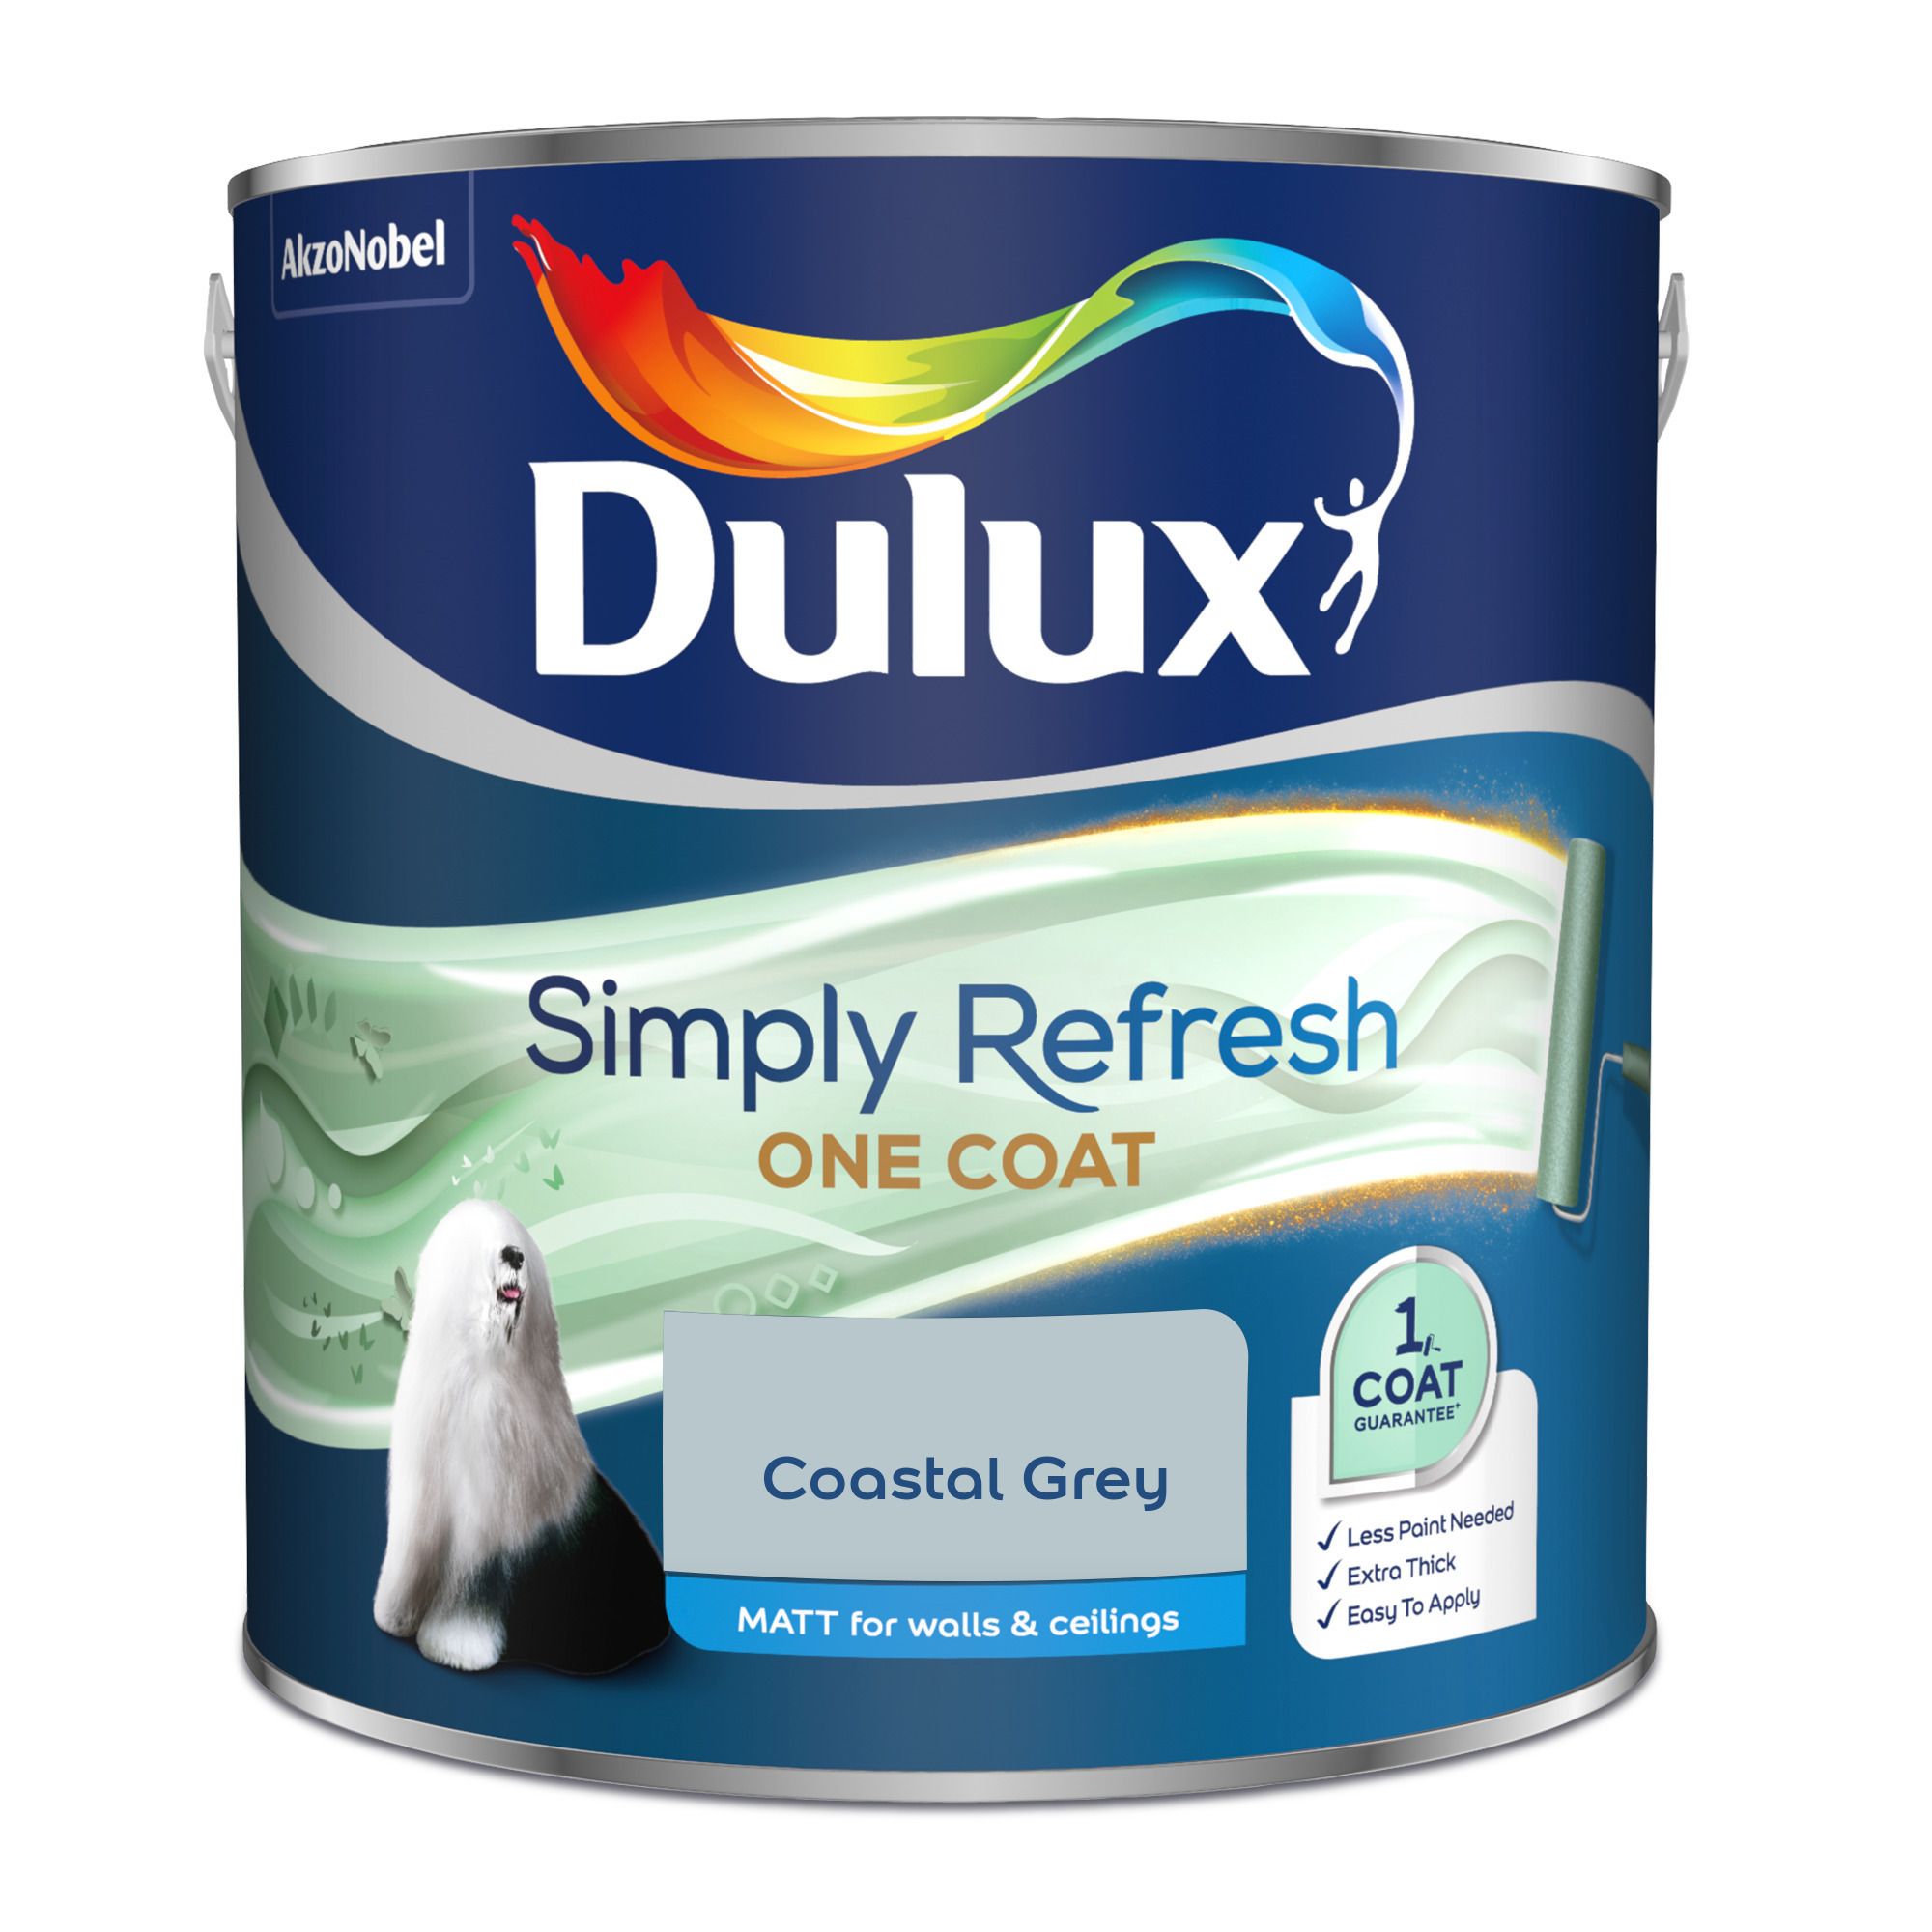 Dulux Simply Refresh One Coat Coastal Grey Matt Wall paint, 2.5L